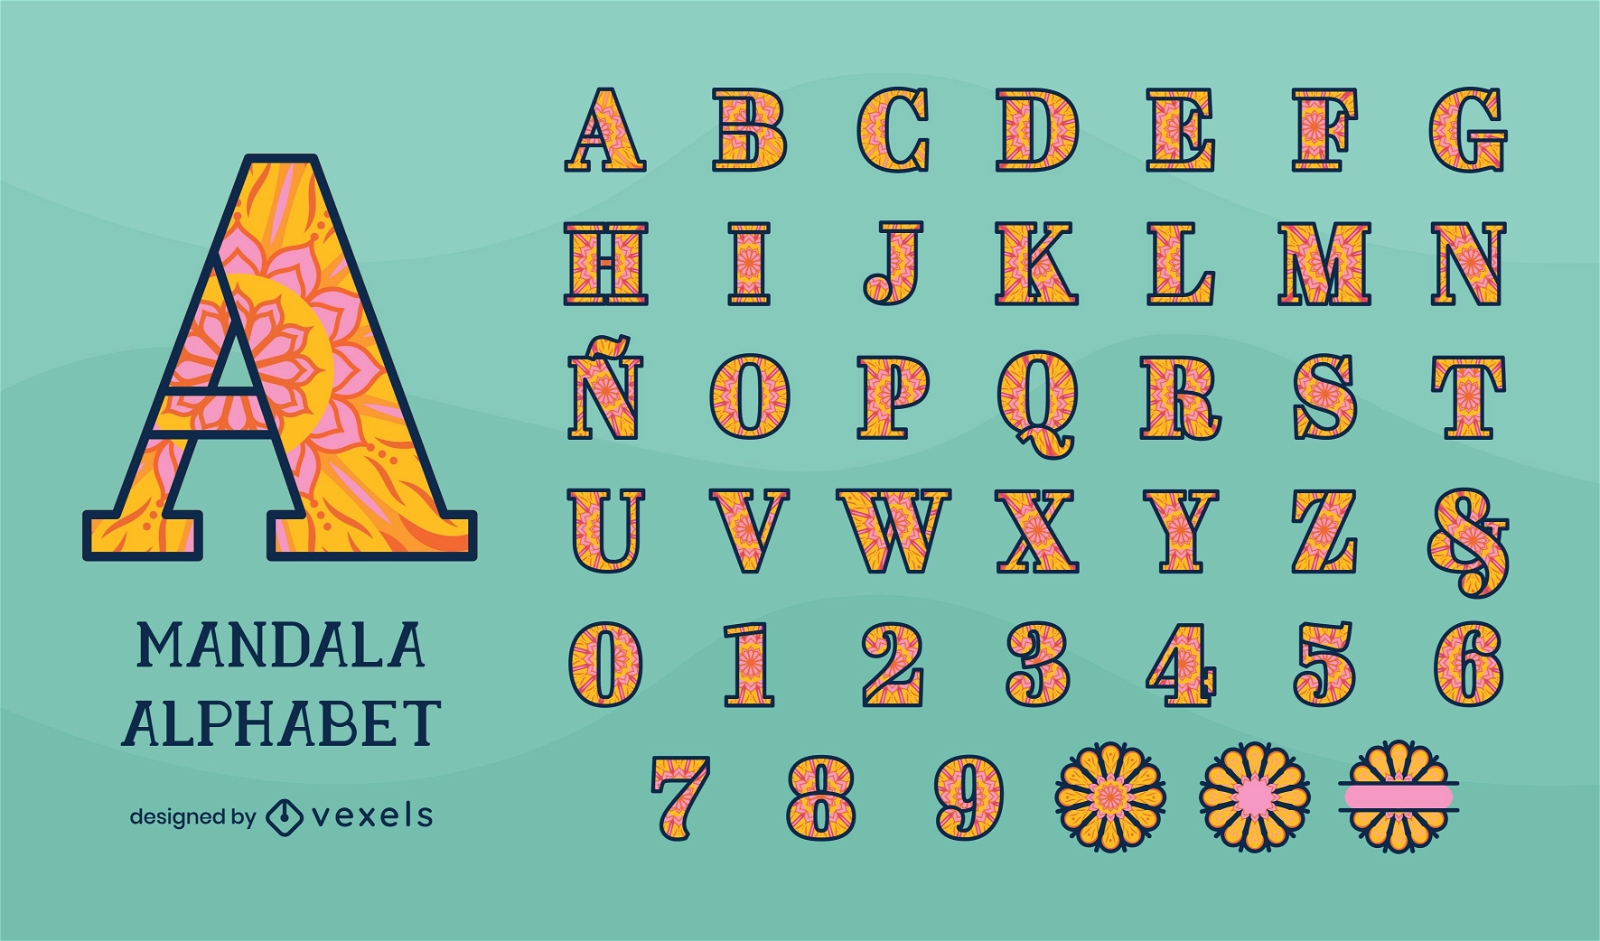 Alphabet design in mandala floral style